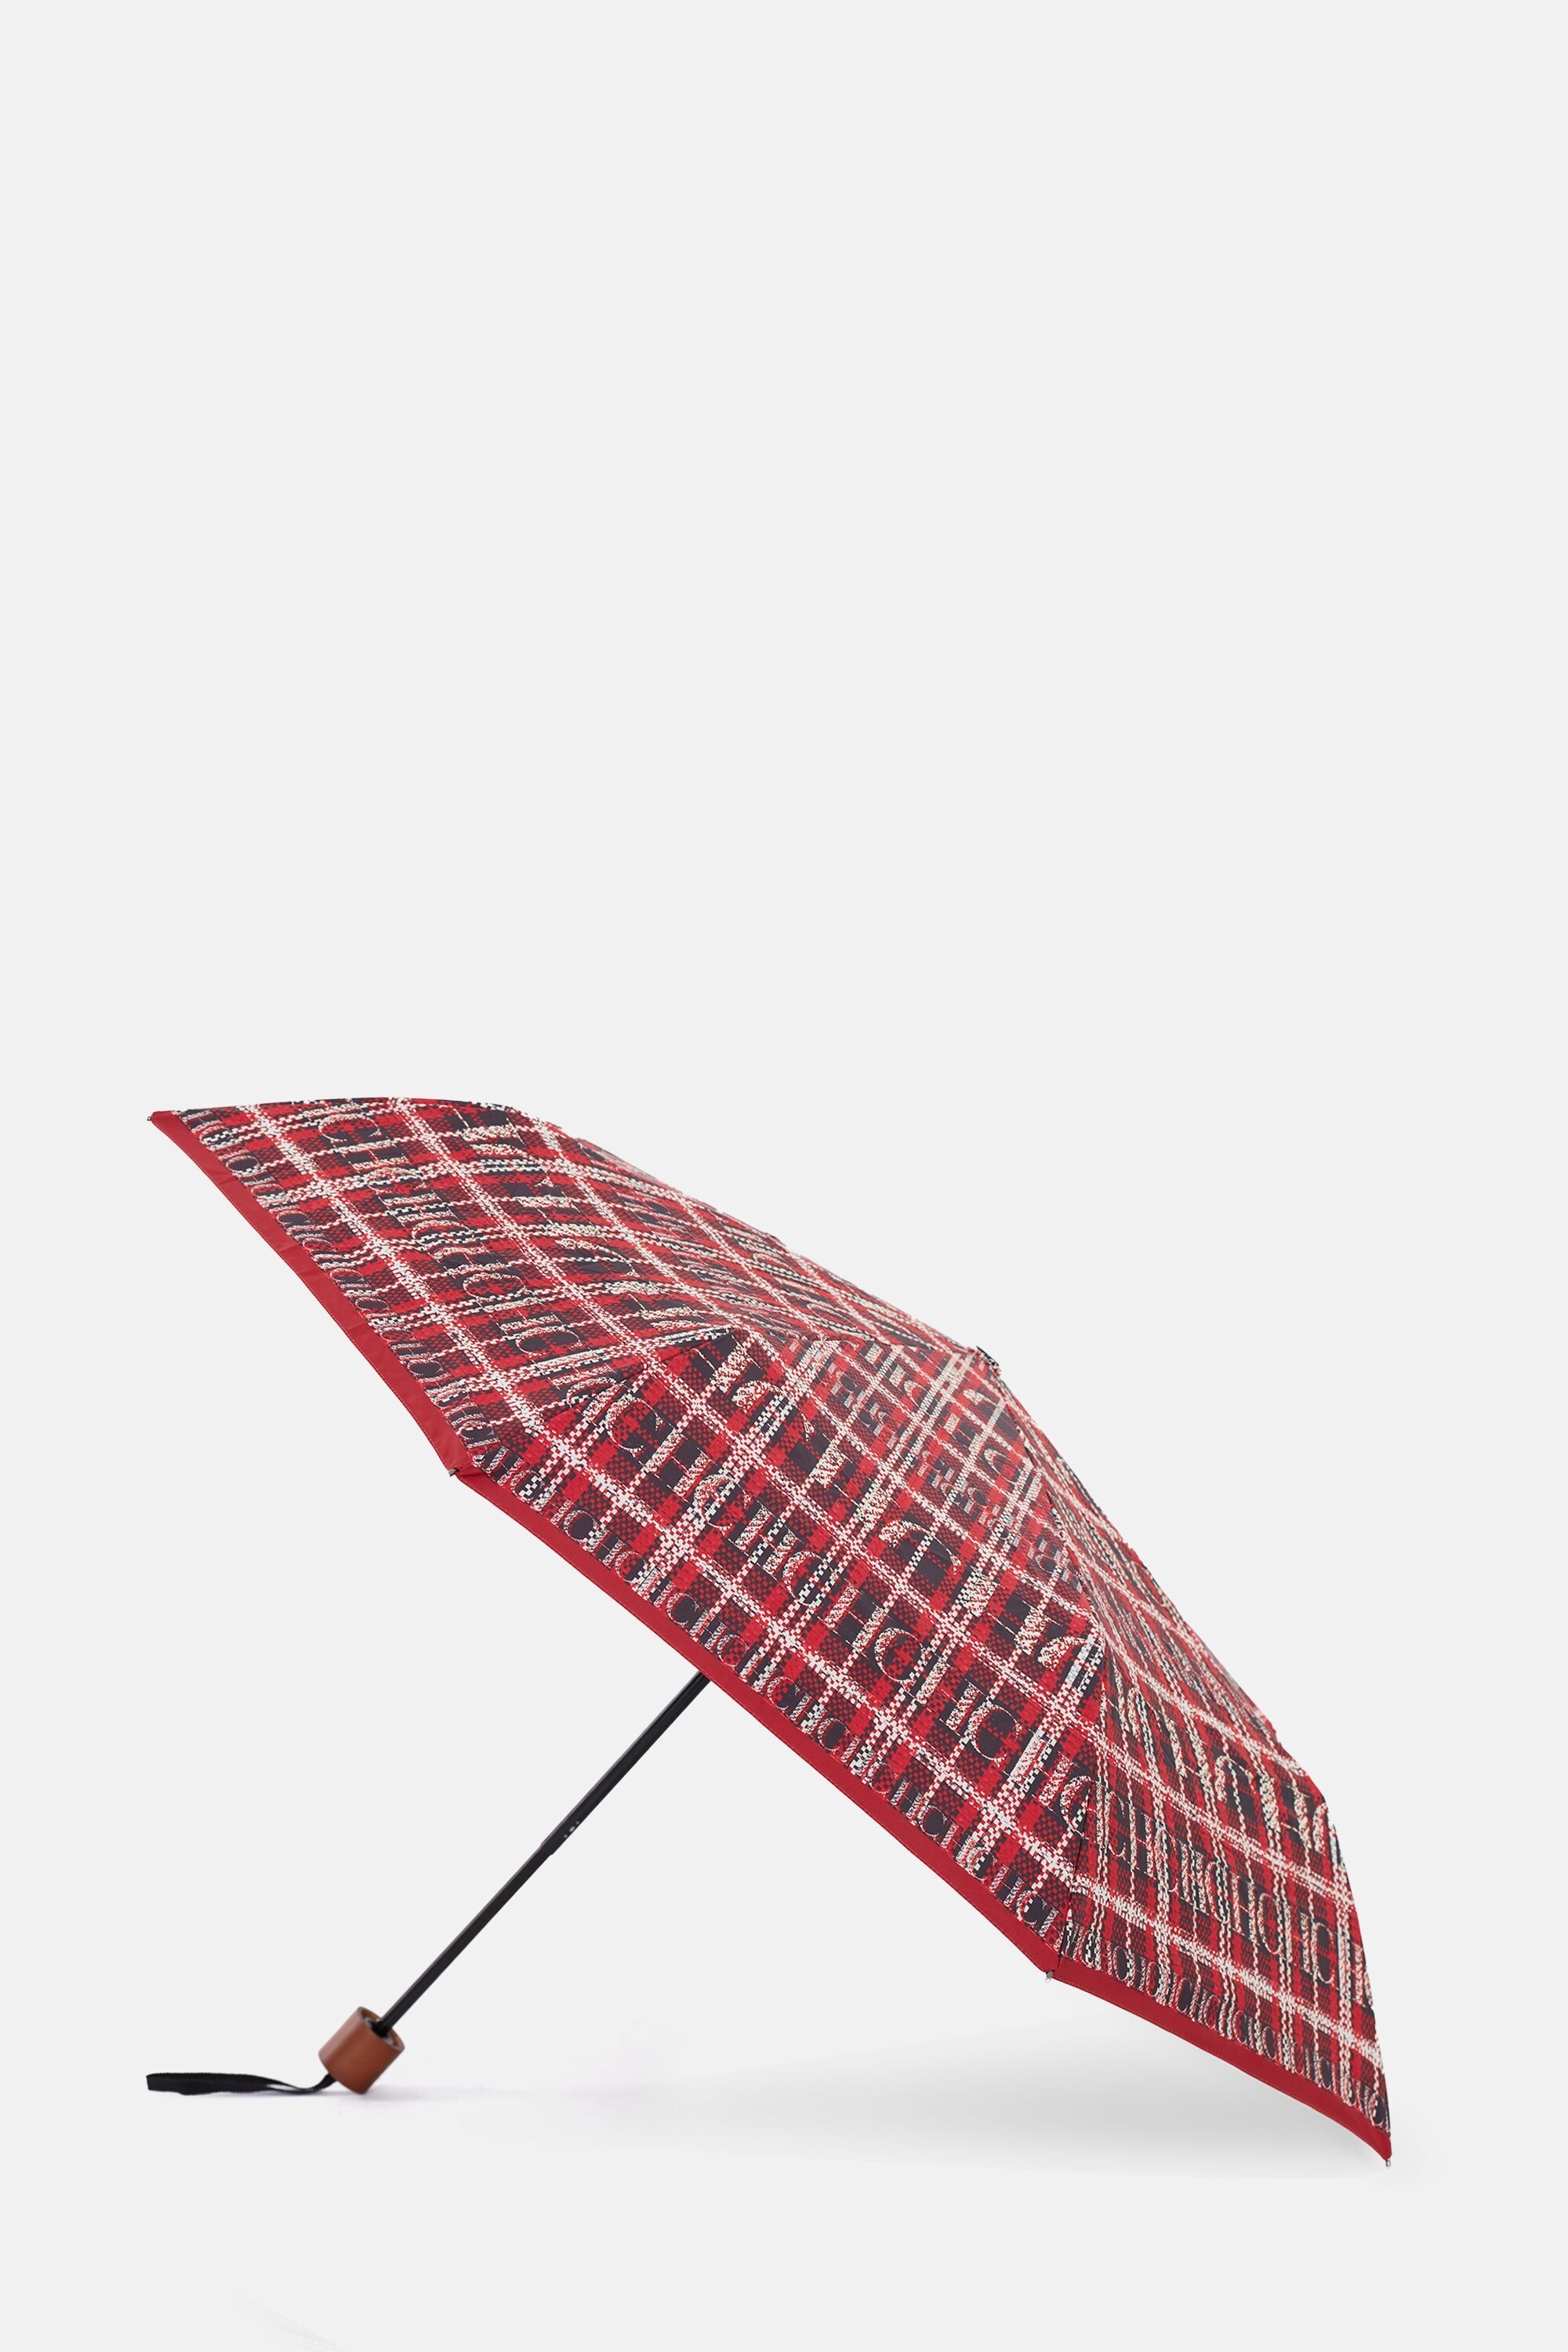 Paraguas Mujer Bicolor Mod Pióva Ø105Cm